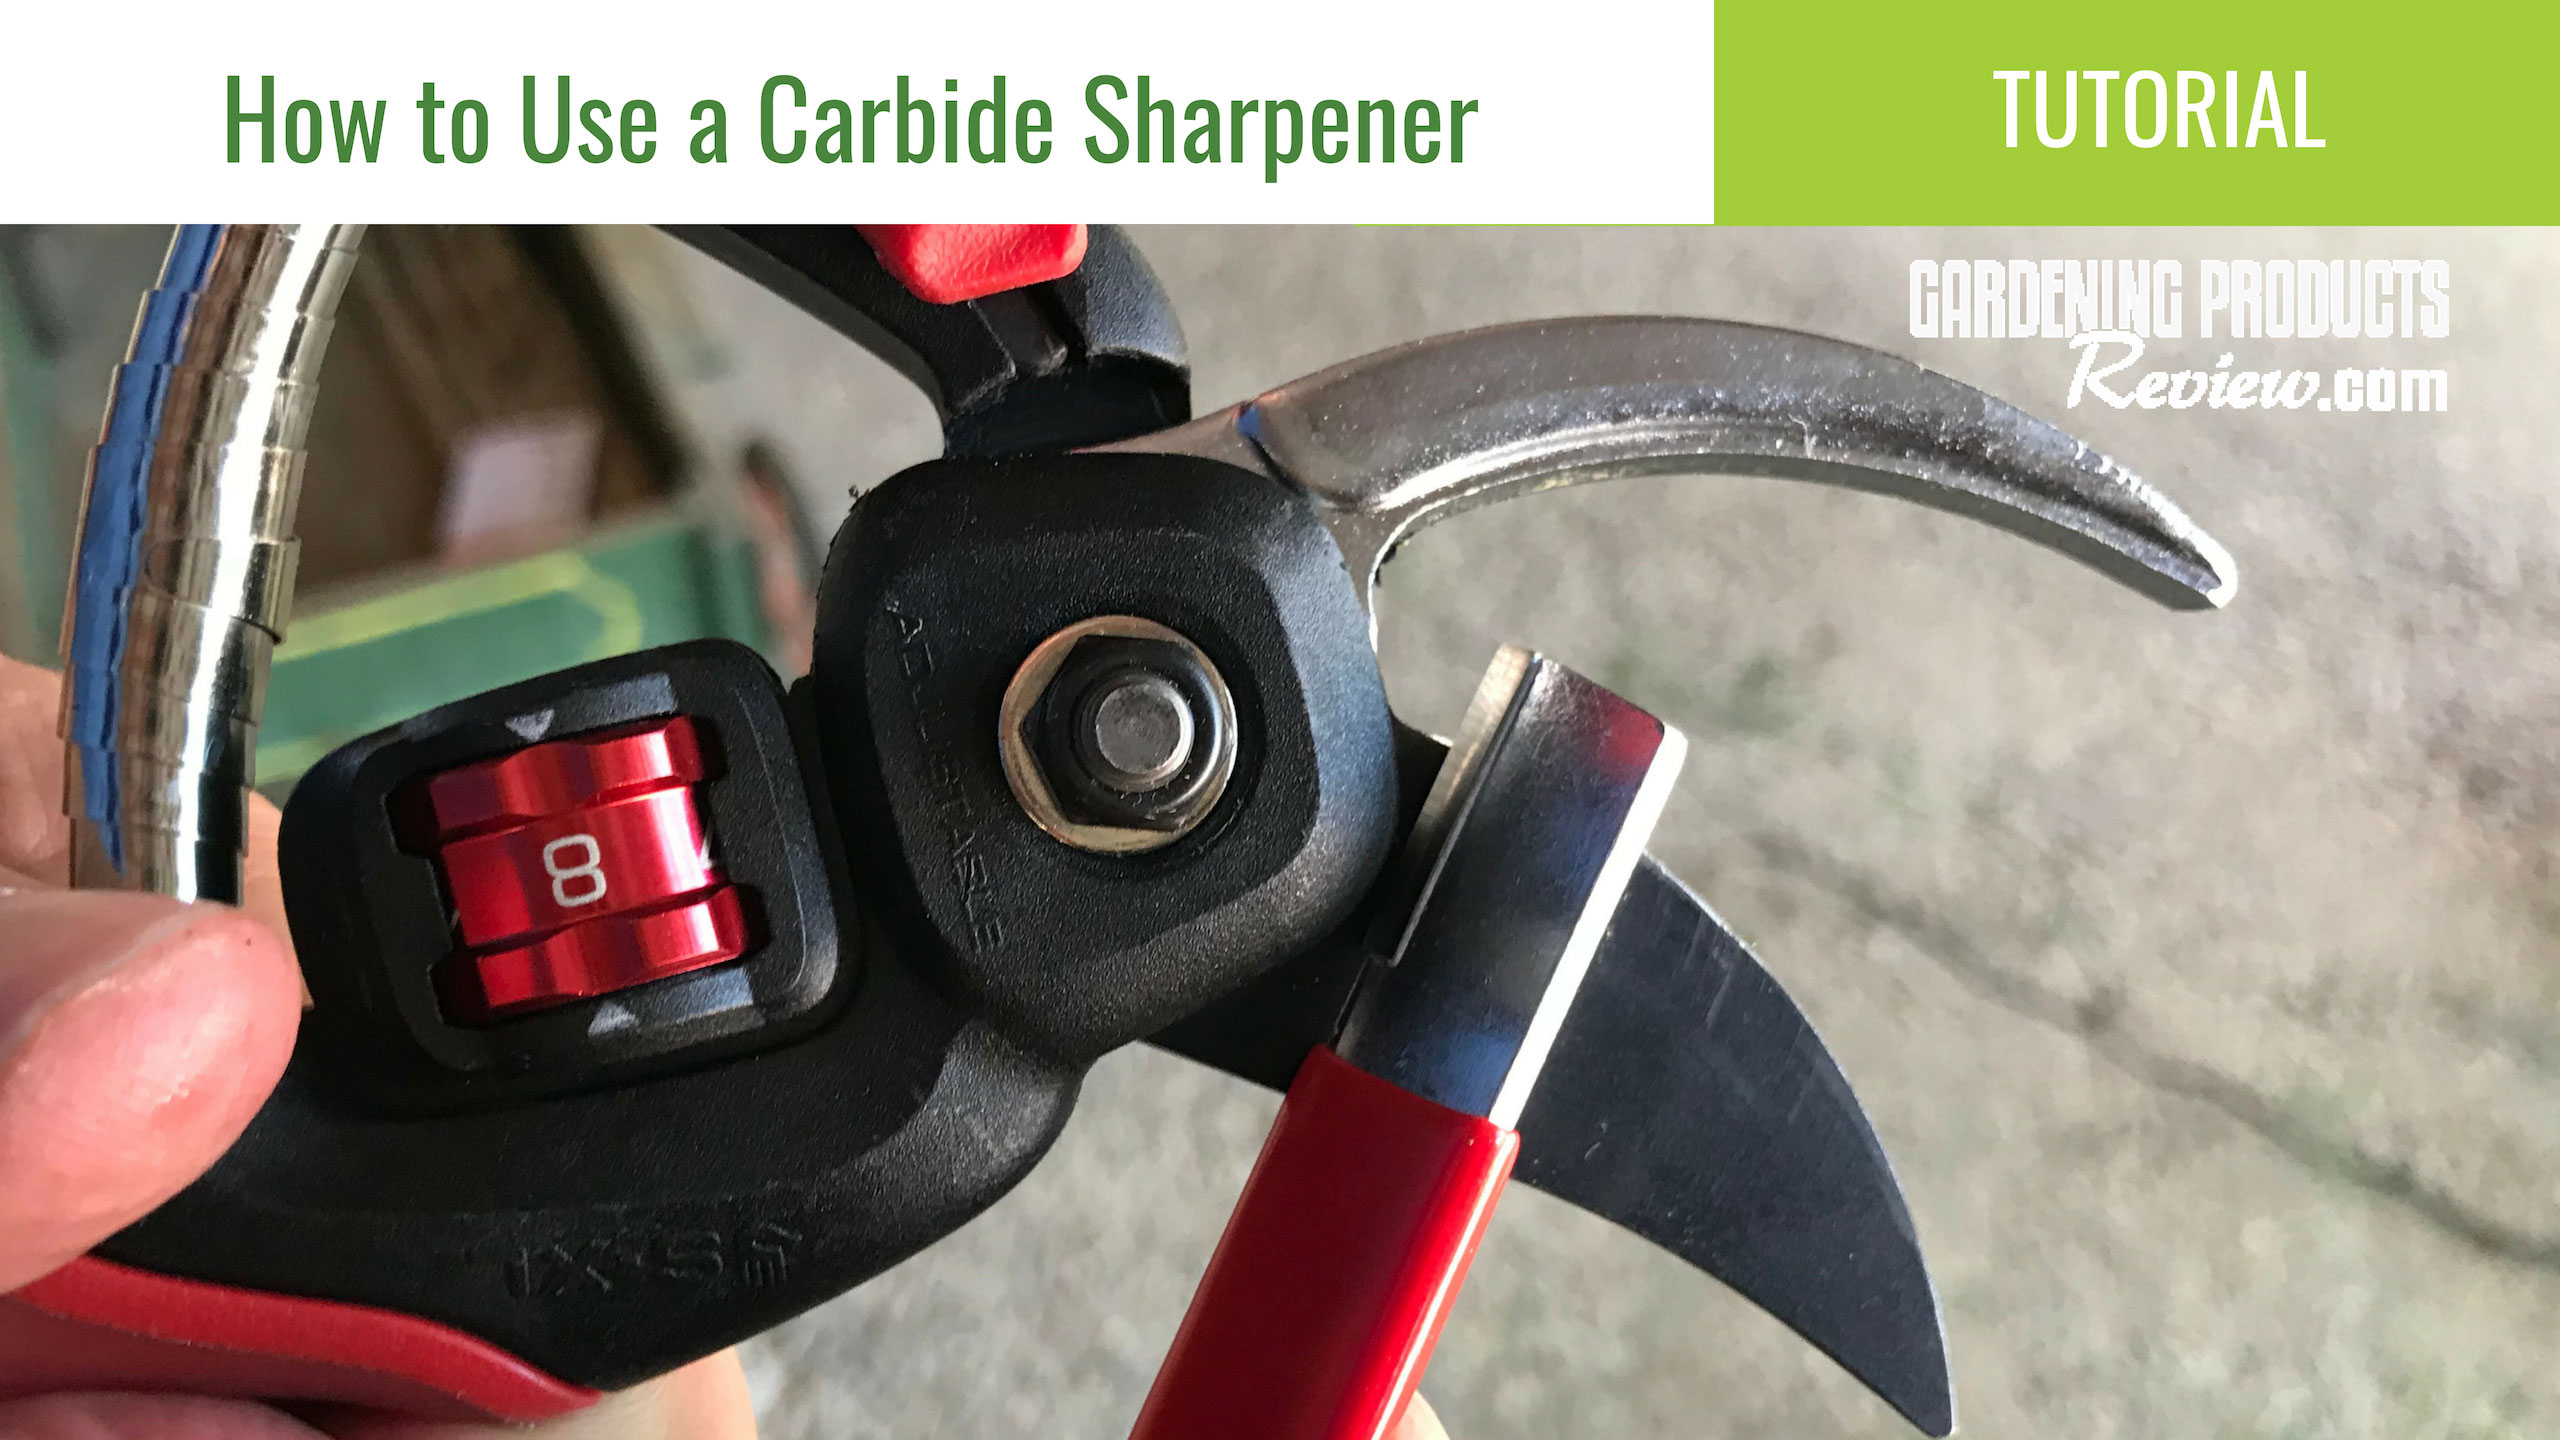 https://gardeningproductsreview.com/wp-content/uploads/carbide-sharpener-for-bypass-pruner-blades.jpg